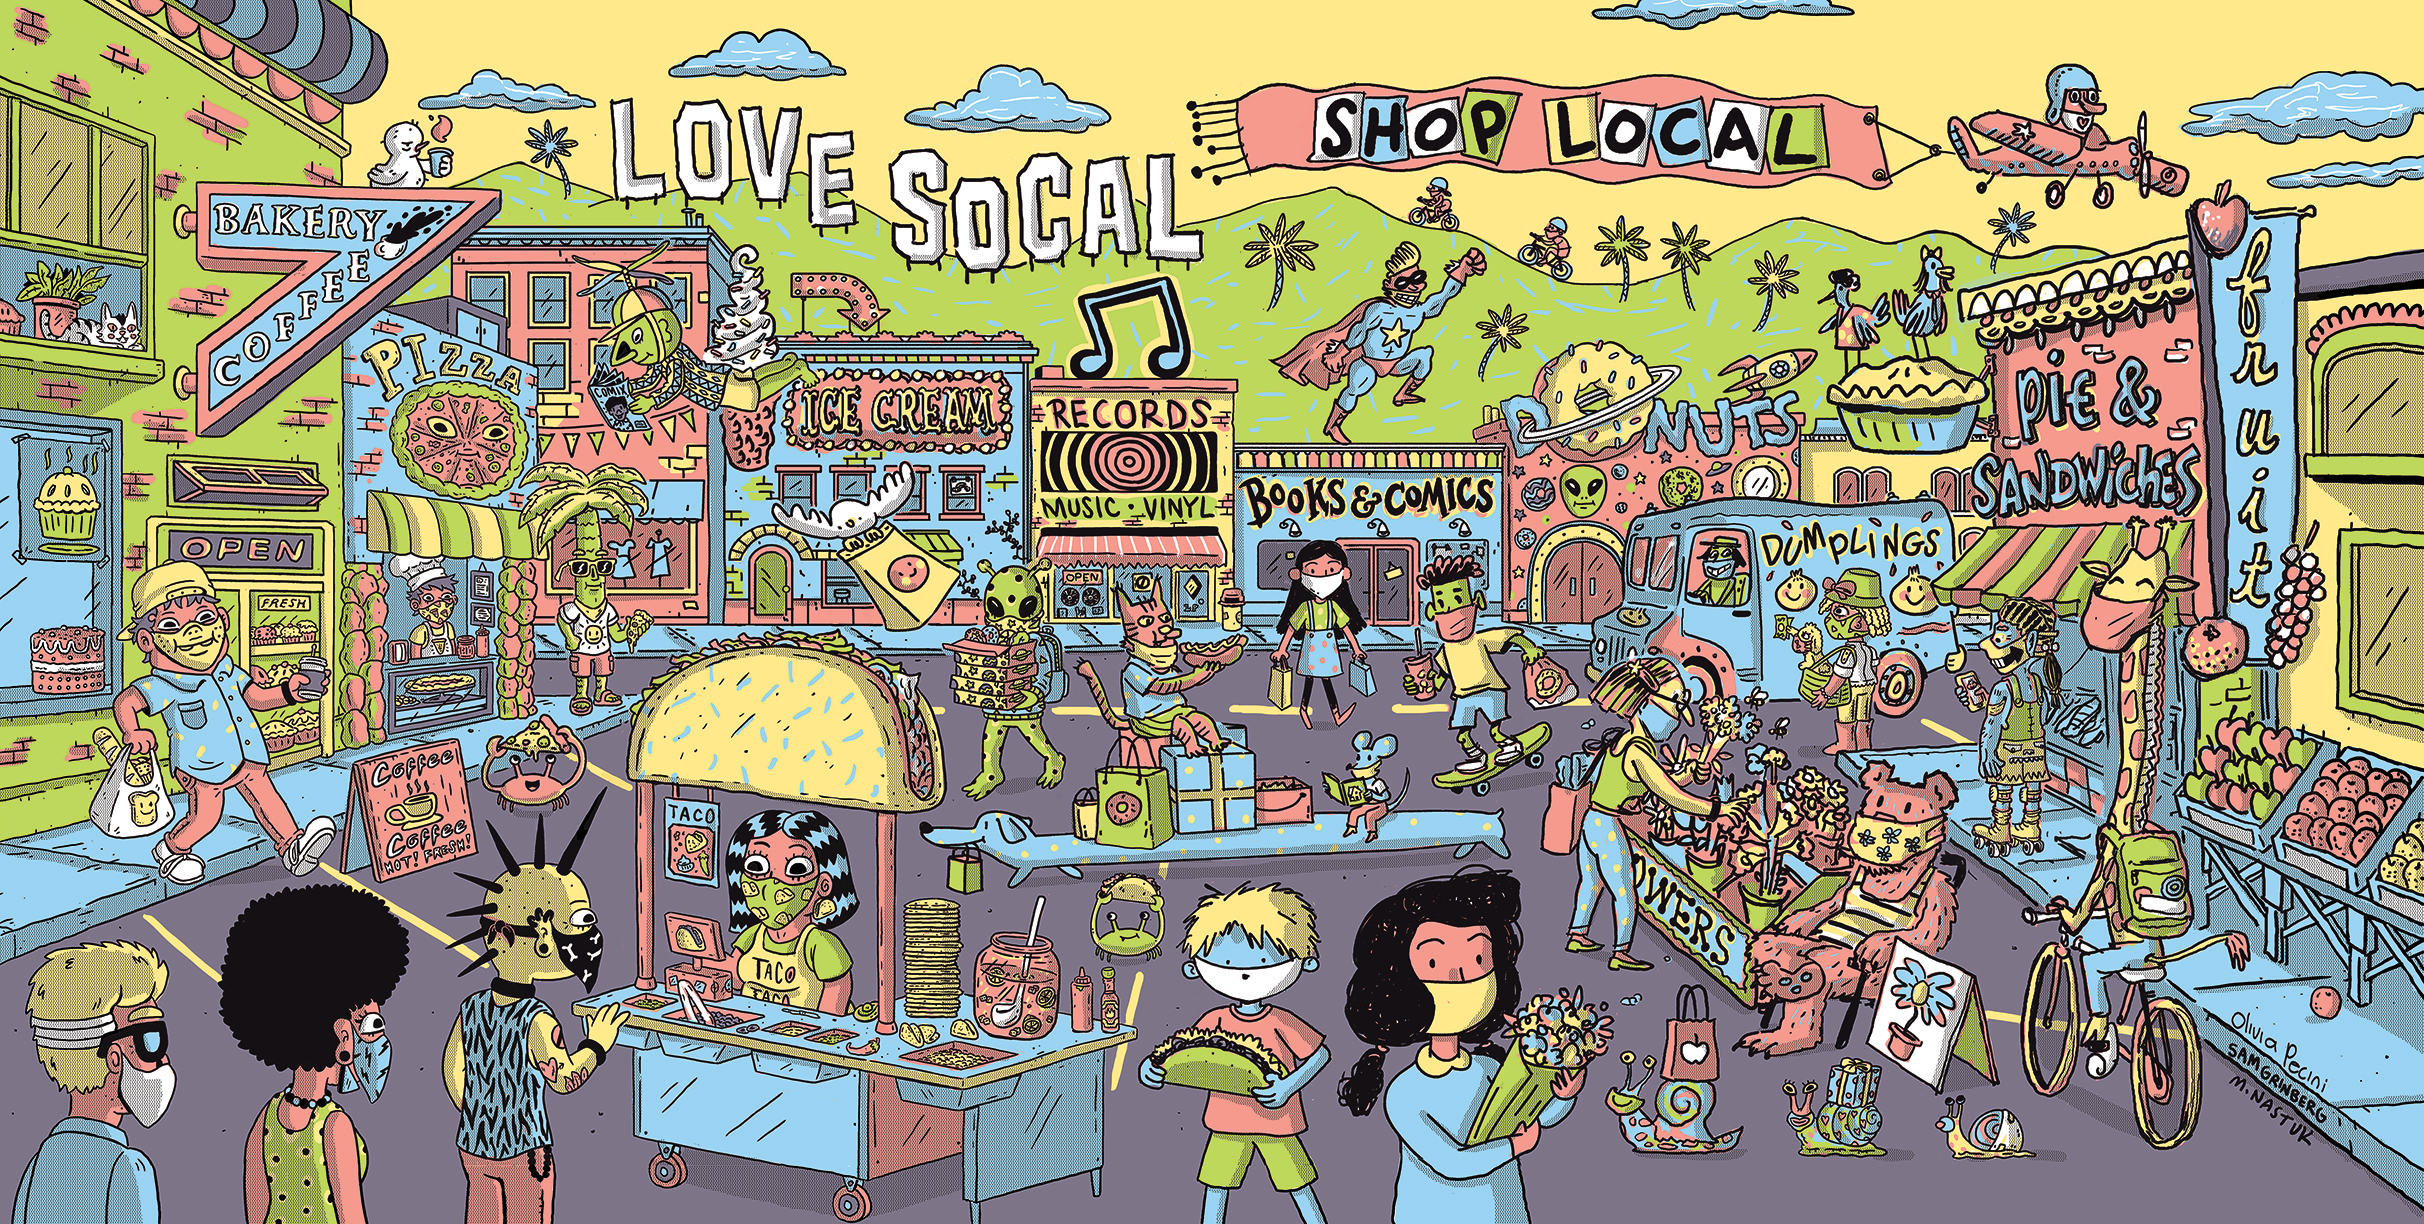 Love SoCal, Shop Local